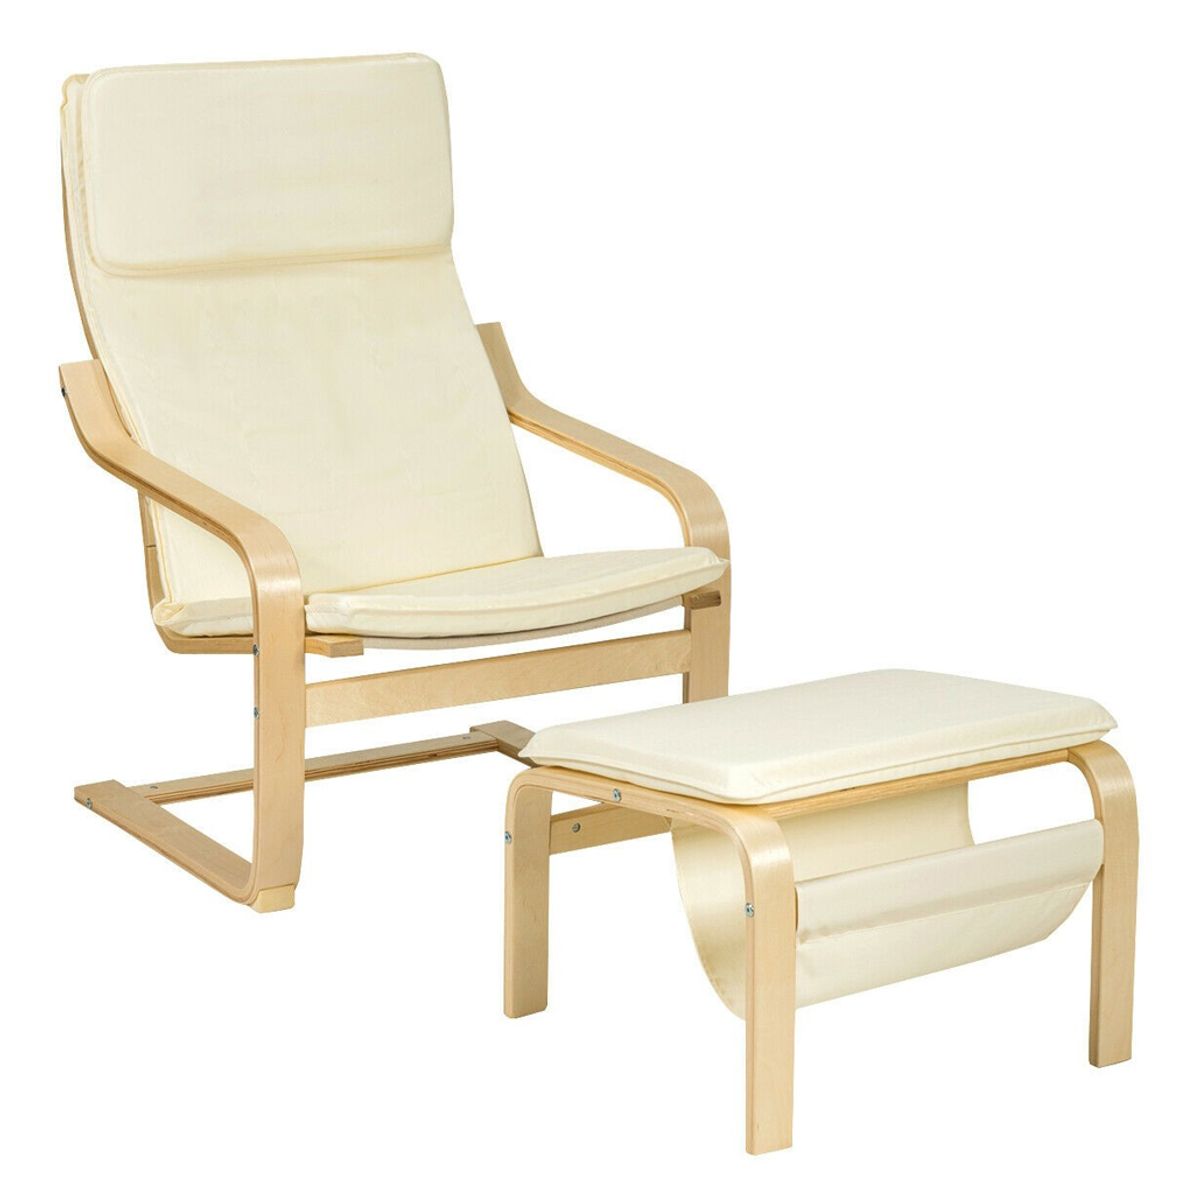 Photos - Sofa Costway Goplus Lounge Chair & Magazine Rack Ottoman - White HW64069WH 